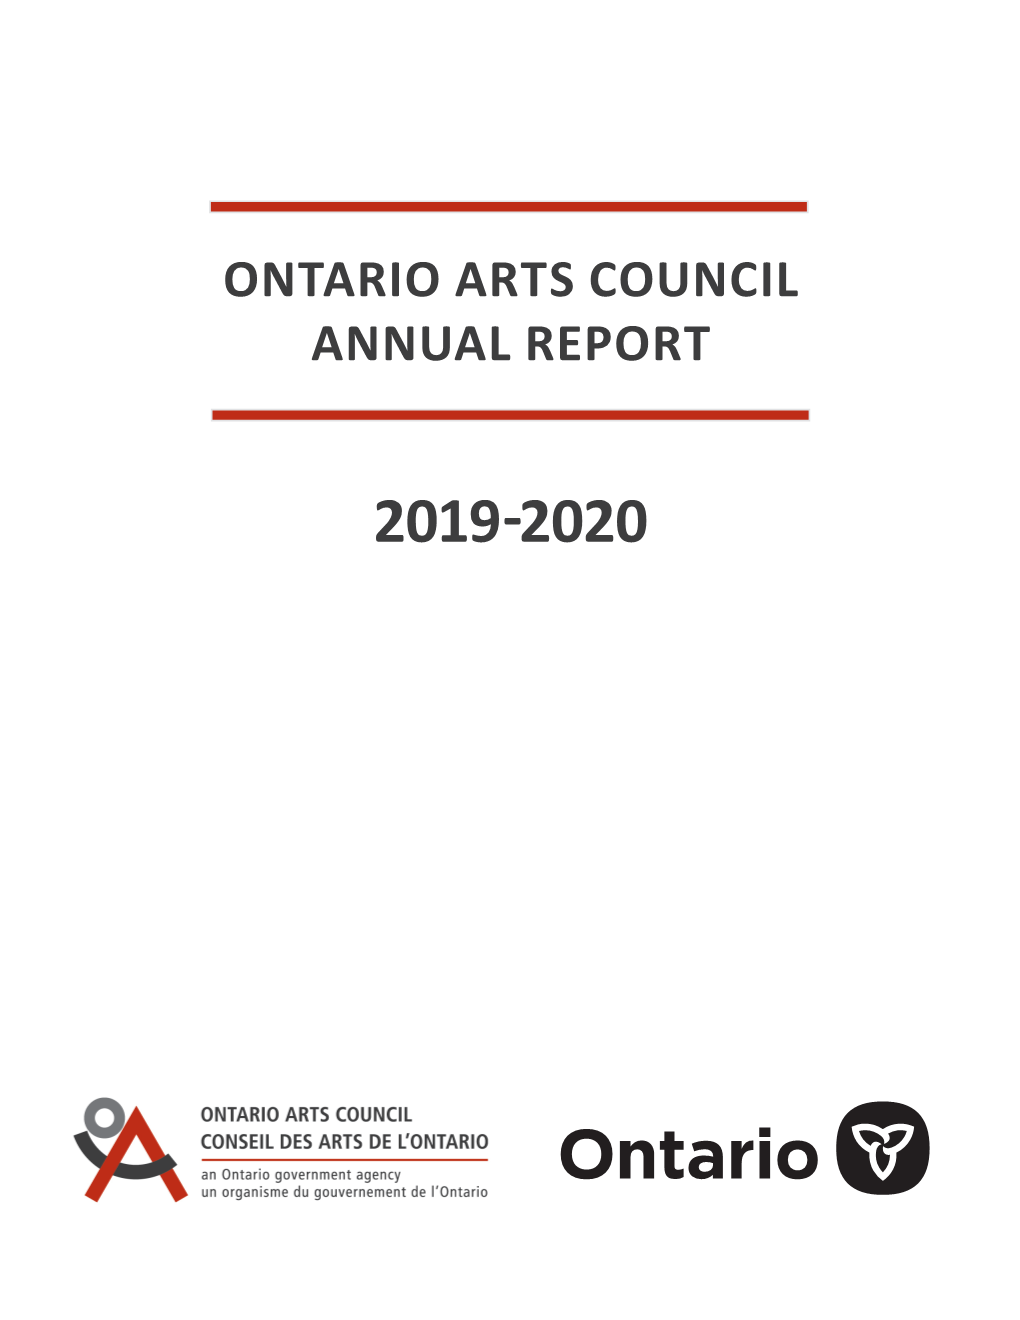 Ontario Arts Council Annual Report 2019-2020